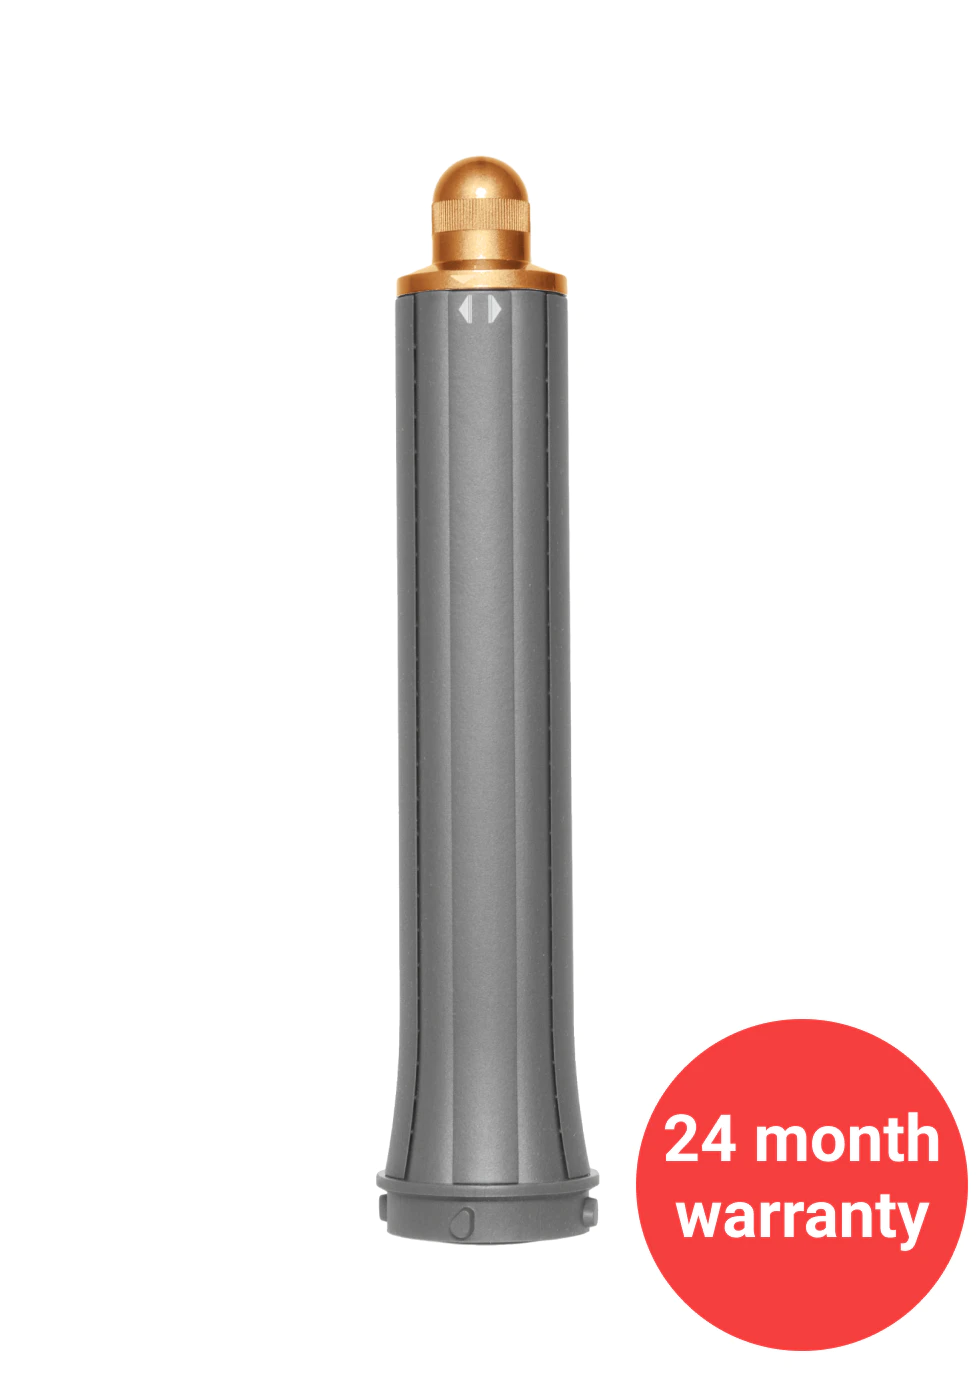 Phụ kiện đầu uốn tóc Dyson Airwrap Long Barrel 1.2inch 30mm - Copper